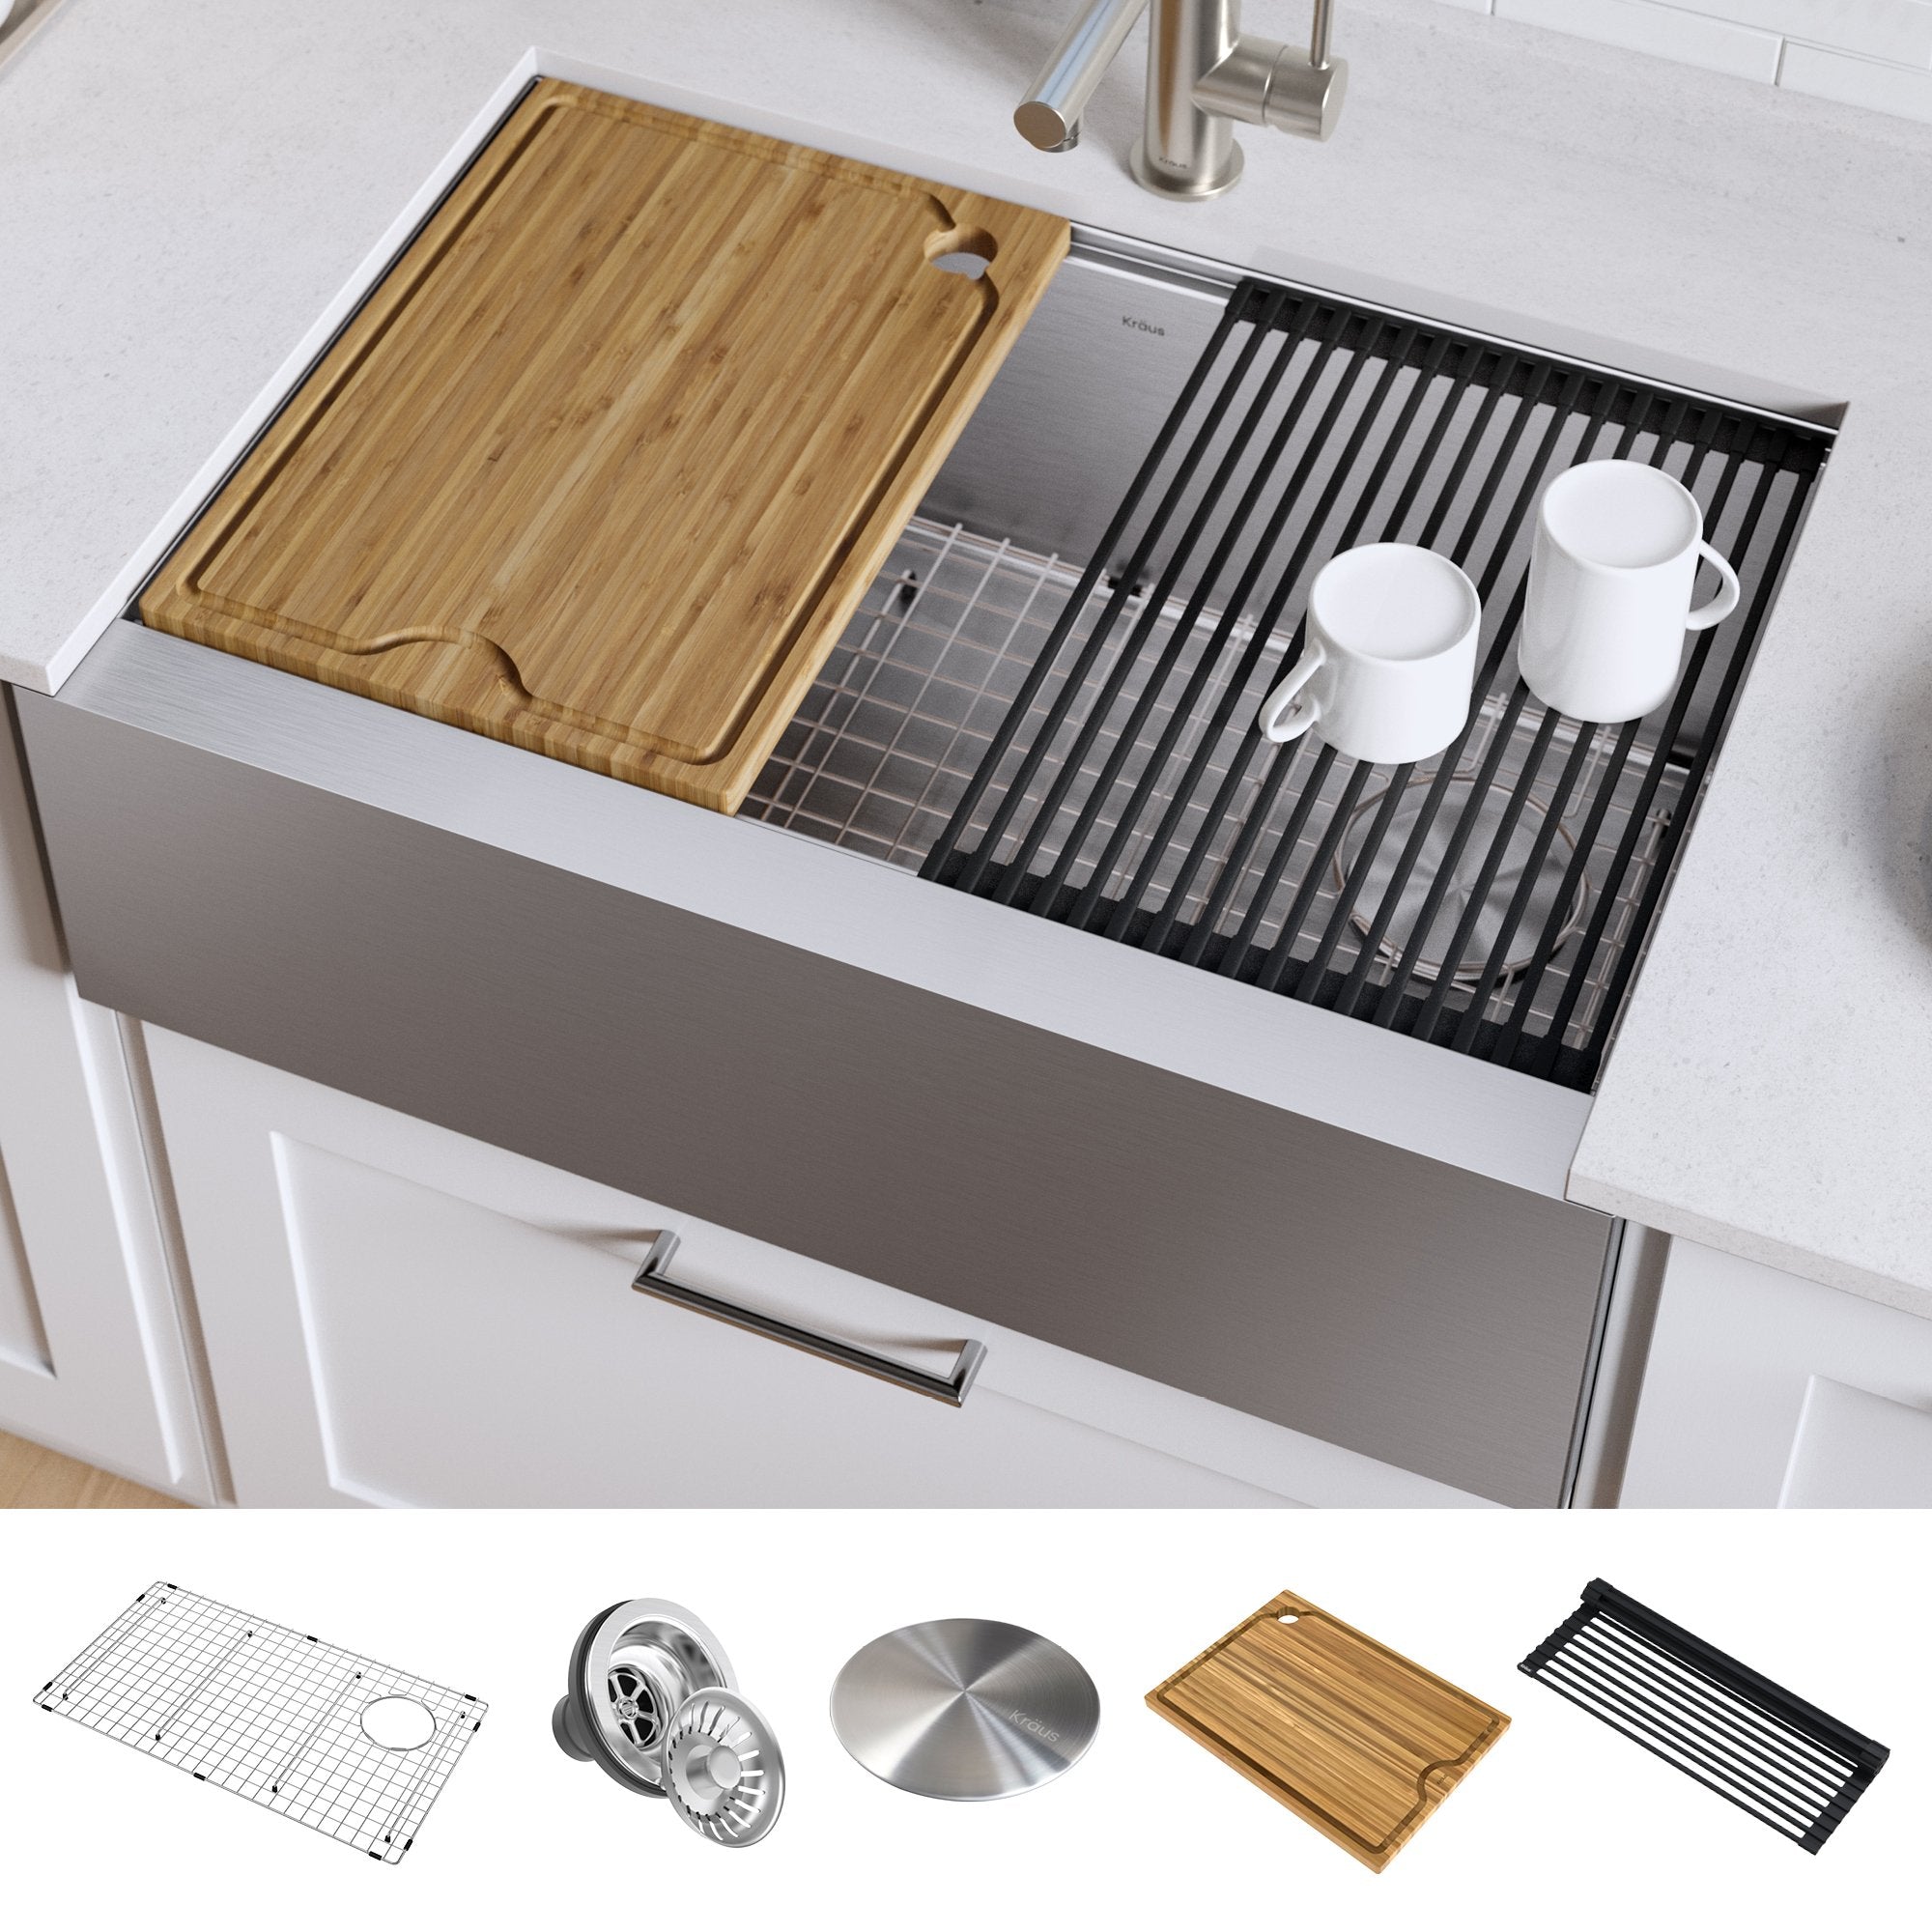 KRAUS Workstation Stainless Steel Kitchen Sink Dish Drying Rack